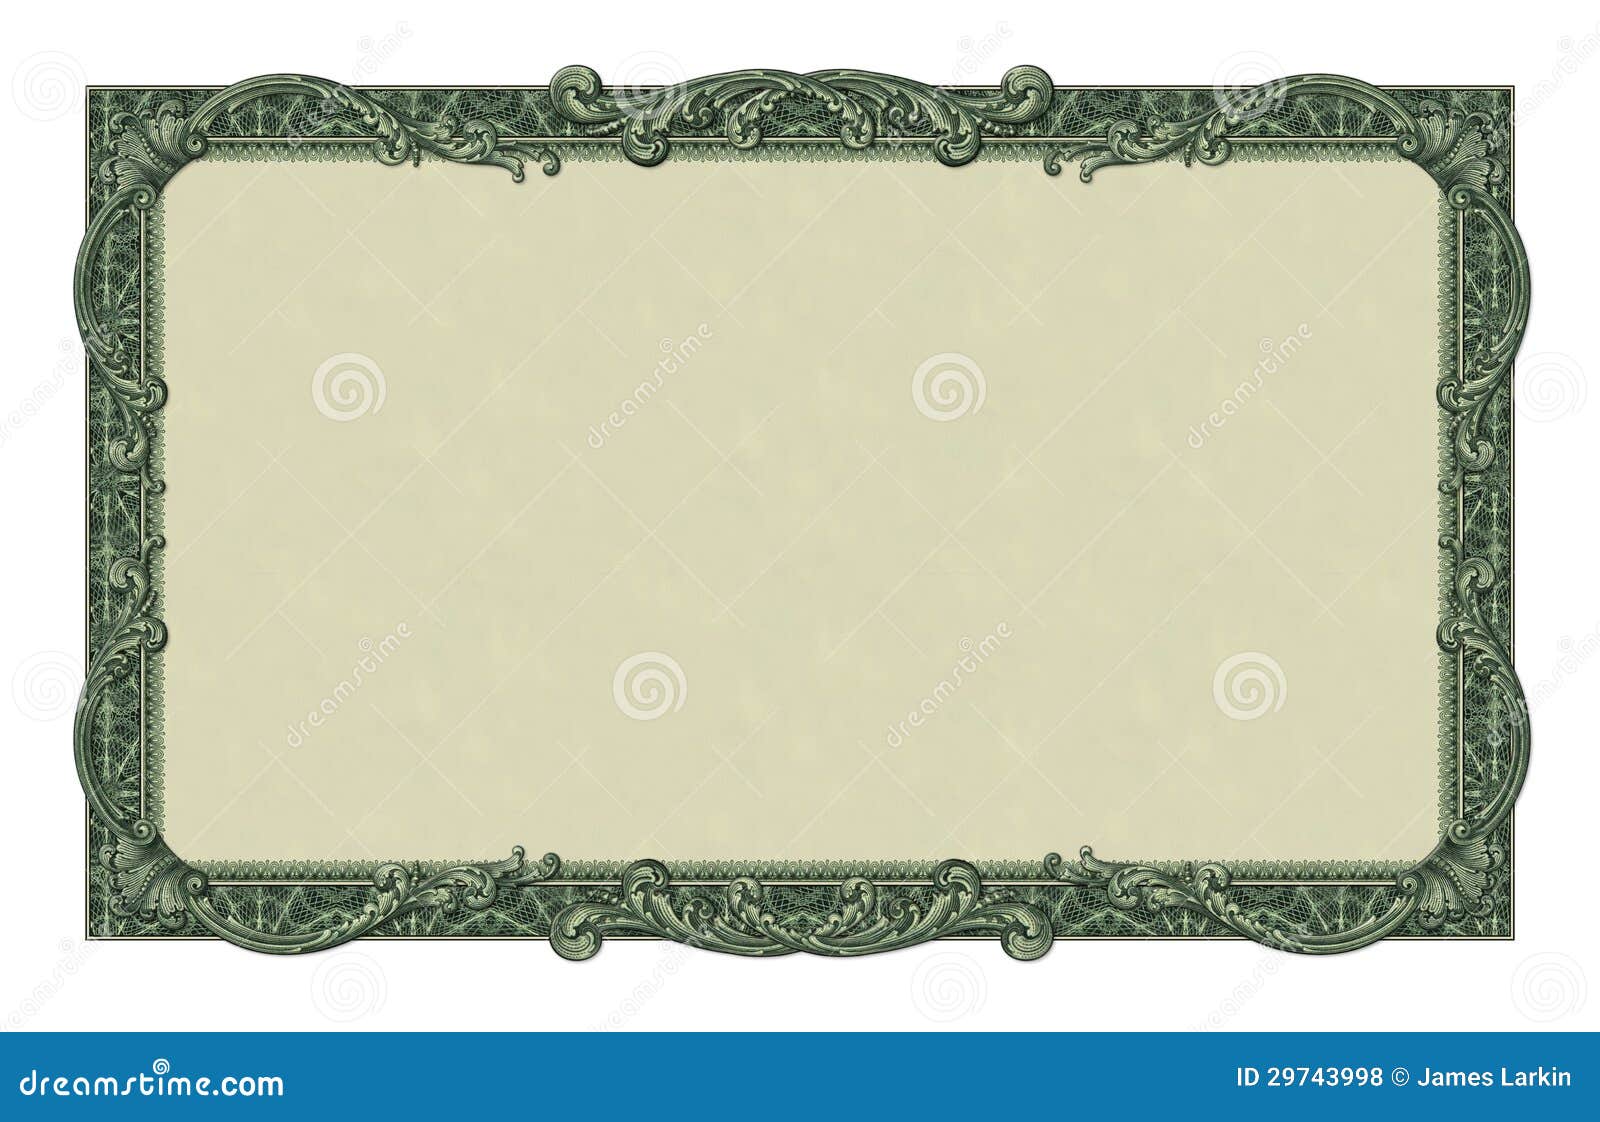 clip art money borders - photo #50